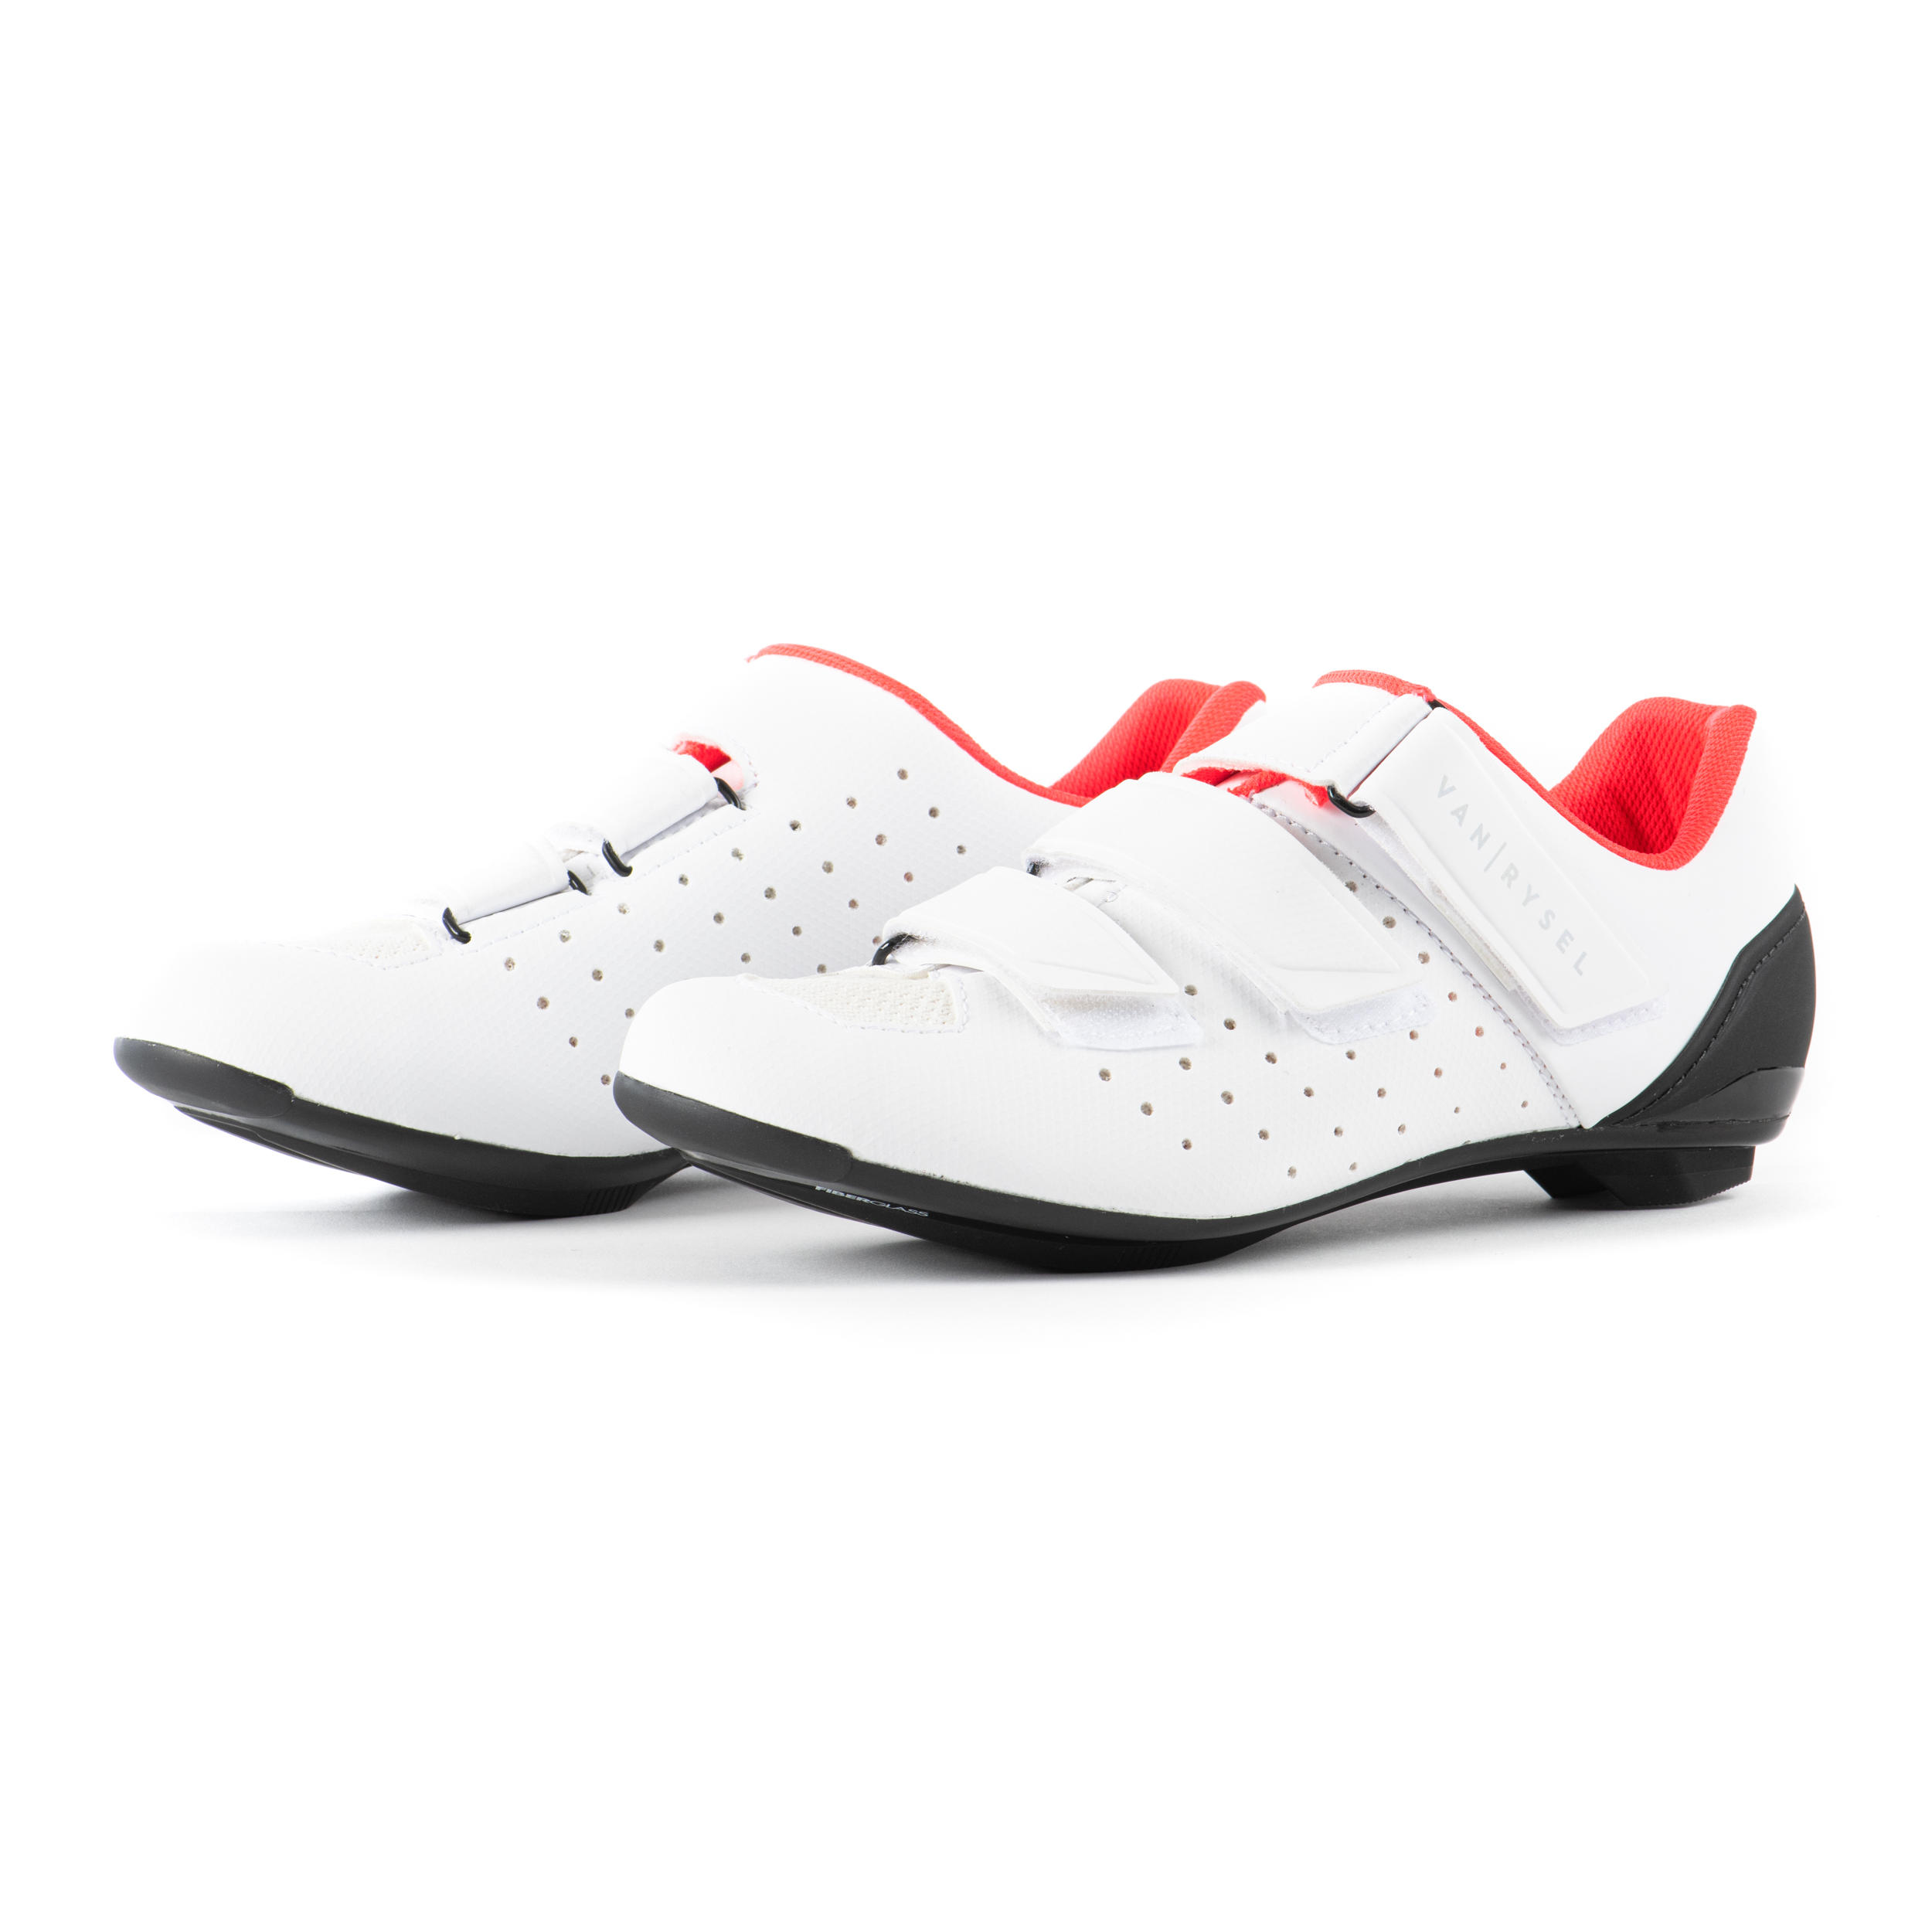 VAN RYSEL RCR500 Women's Road Cycling Shoes - White